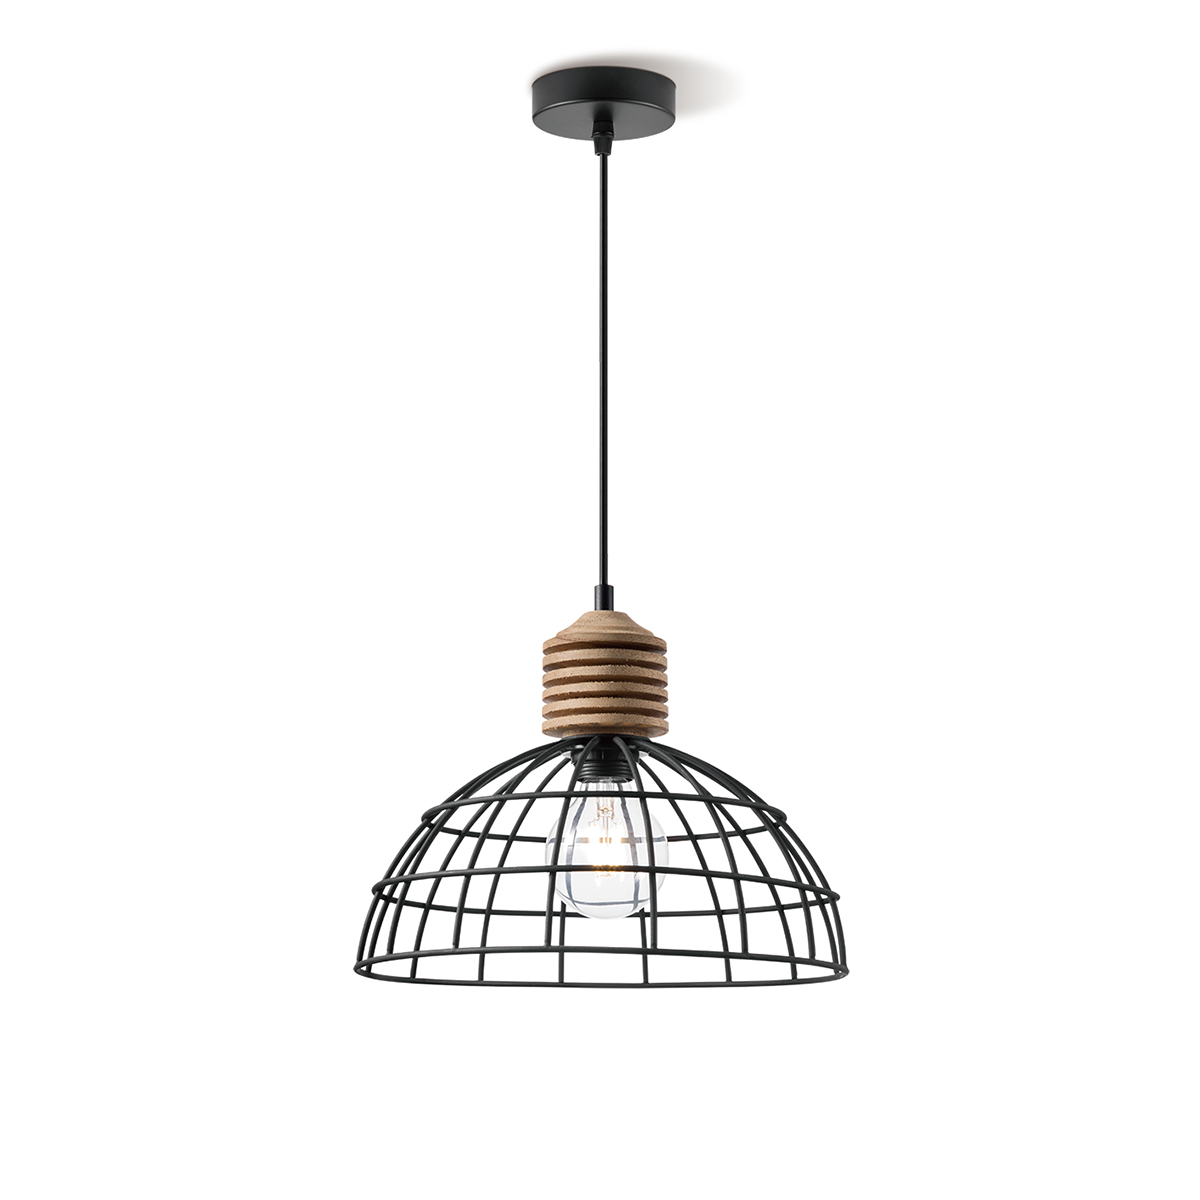 Tangla lighting - TLP4025-01SB - LED pendant lamp 1 Light - metal and wood in sand black - medium - large - E27